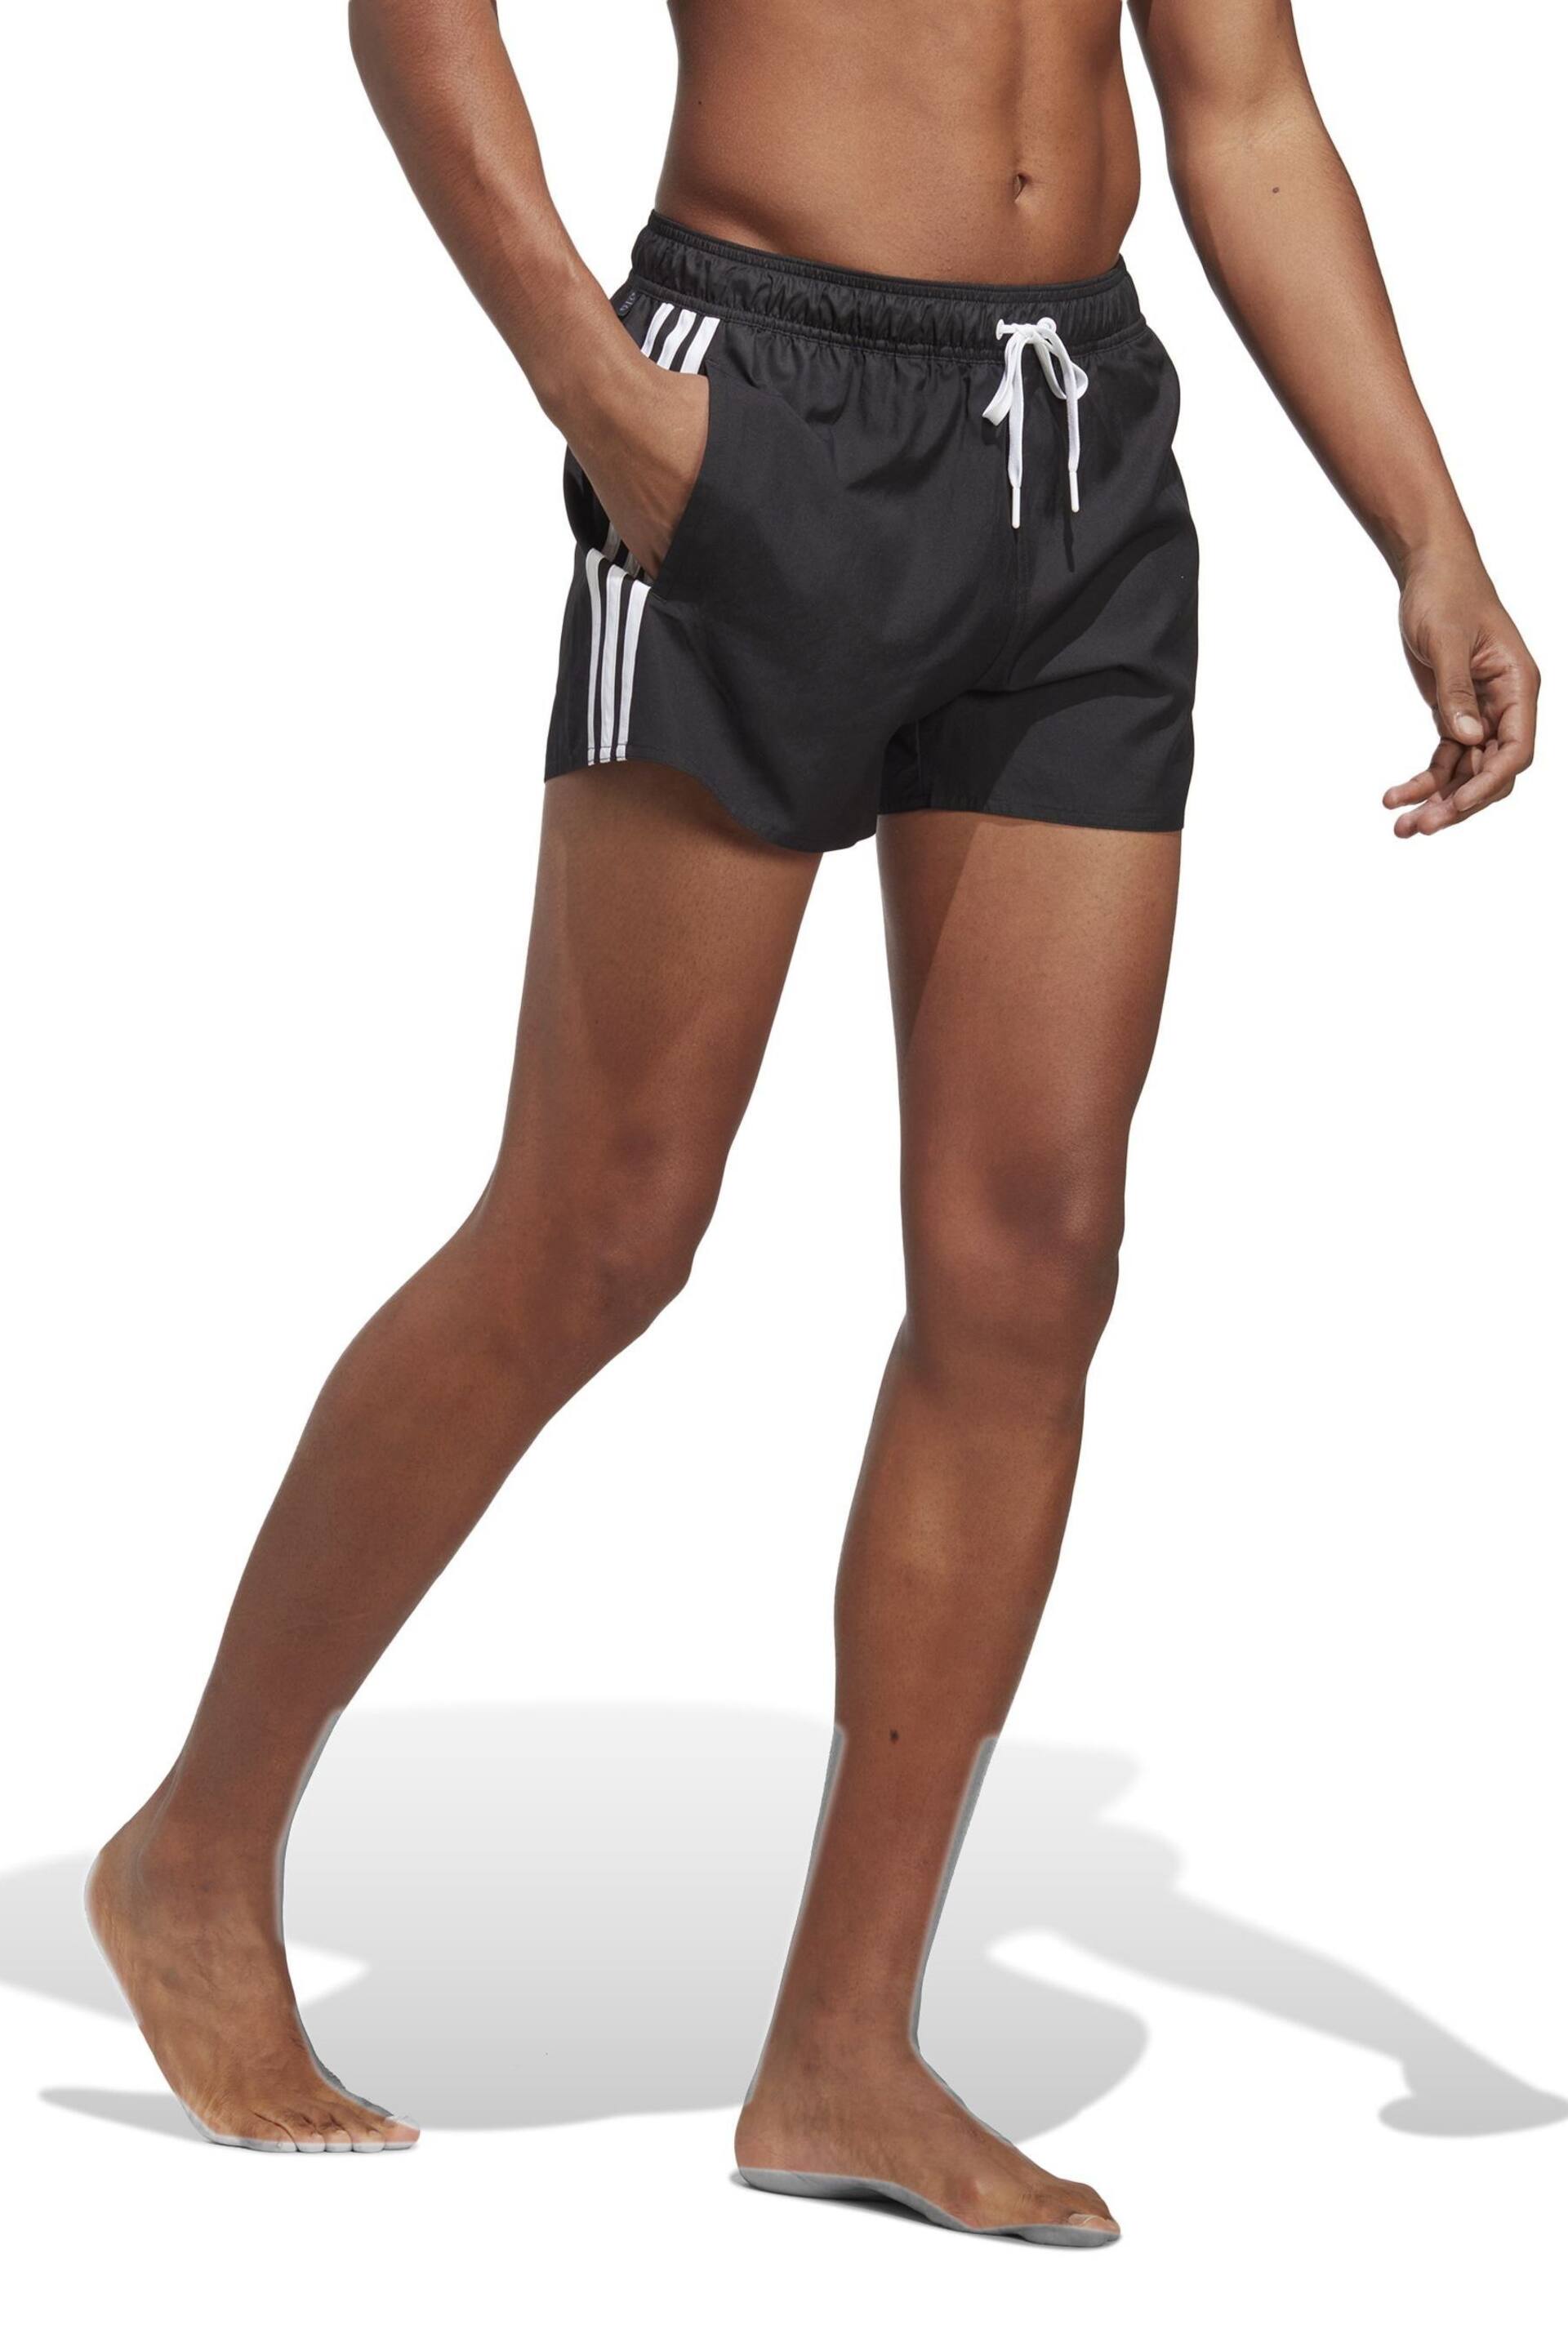 adidas Black Performance 3-Stripes Clx Very-Short-Length Swim Orange Shorts - Image 3 of 6